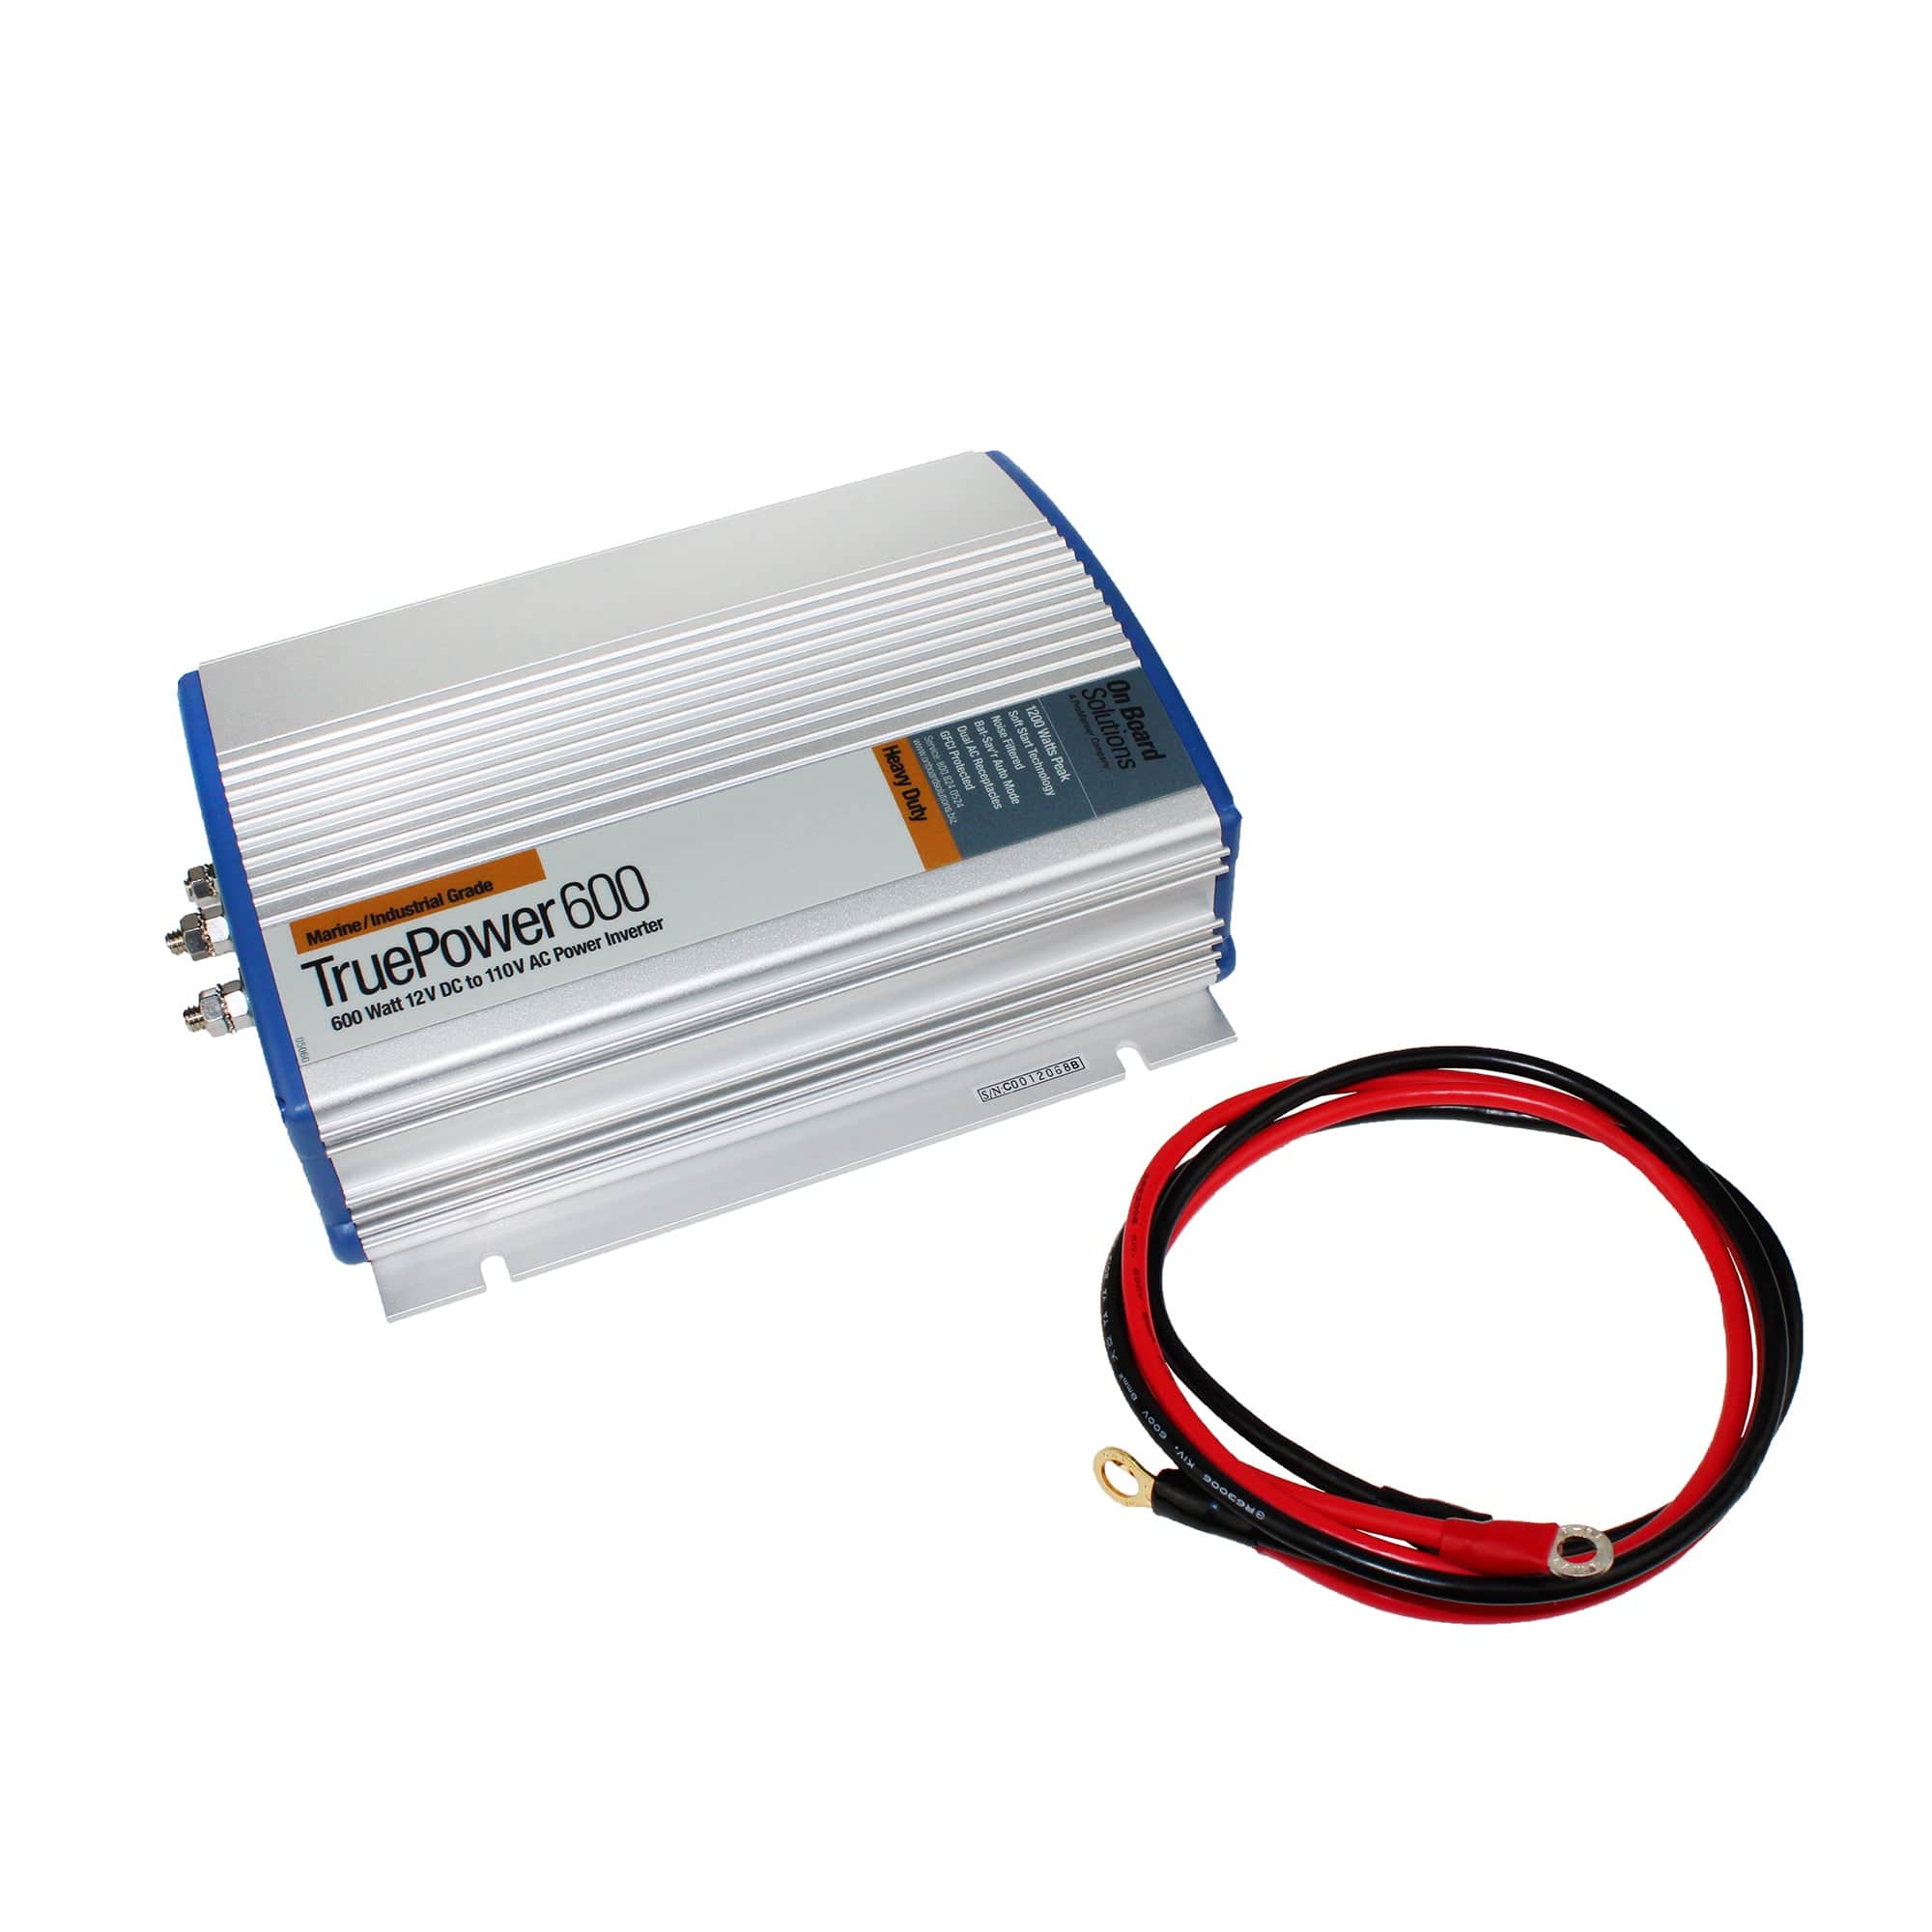 ProMariner 05060 True Power - 600 Watt, 12 Volt Output Inverter